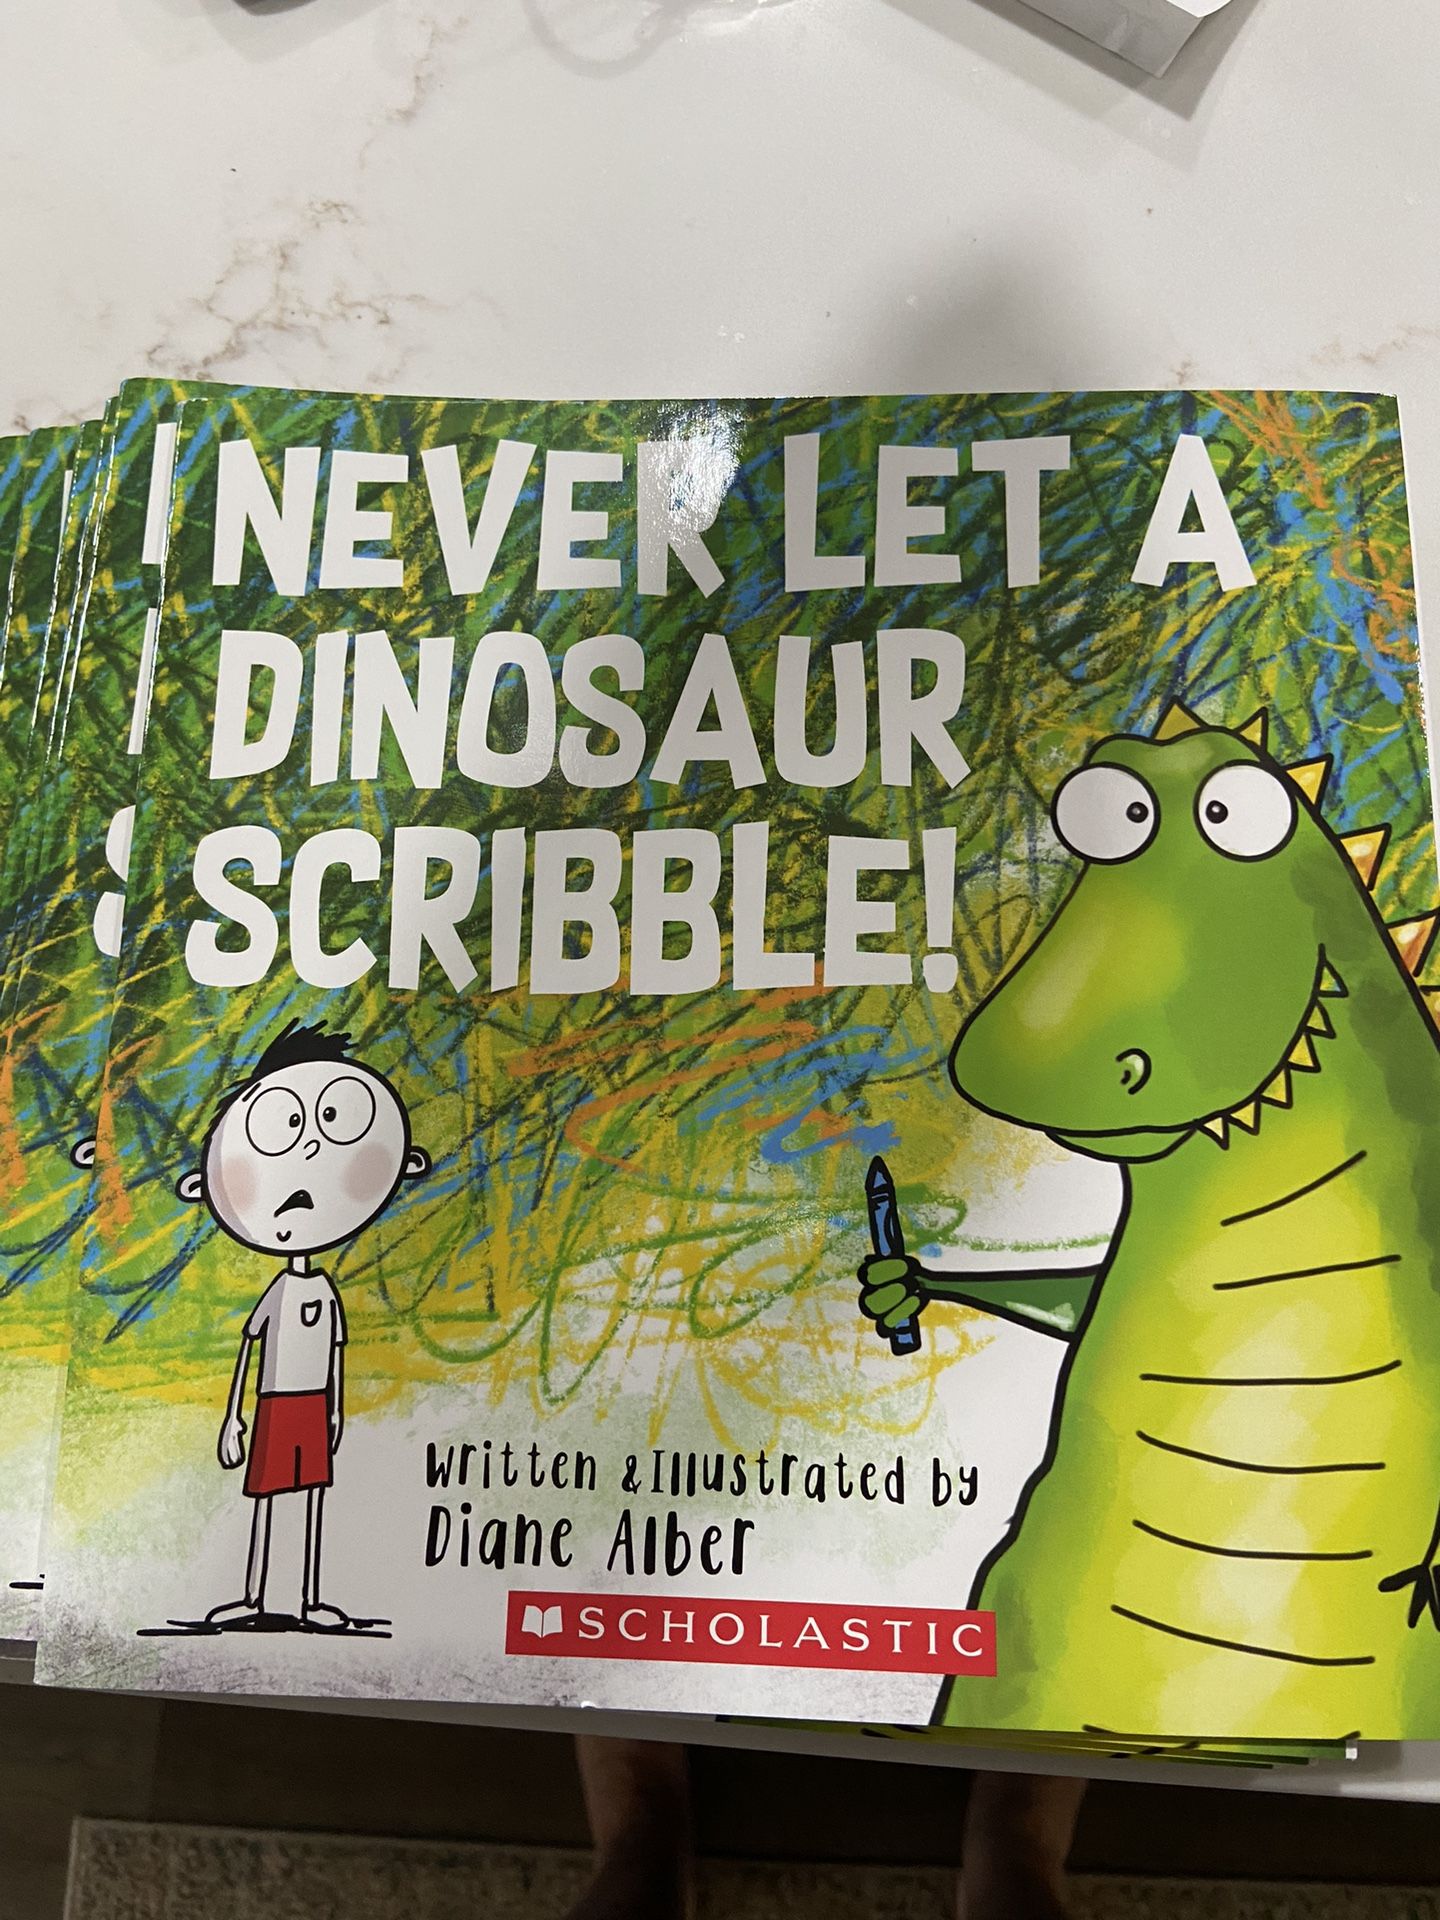 Children’s Book-Never let A Dinosaur Scribble